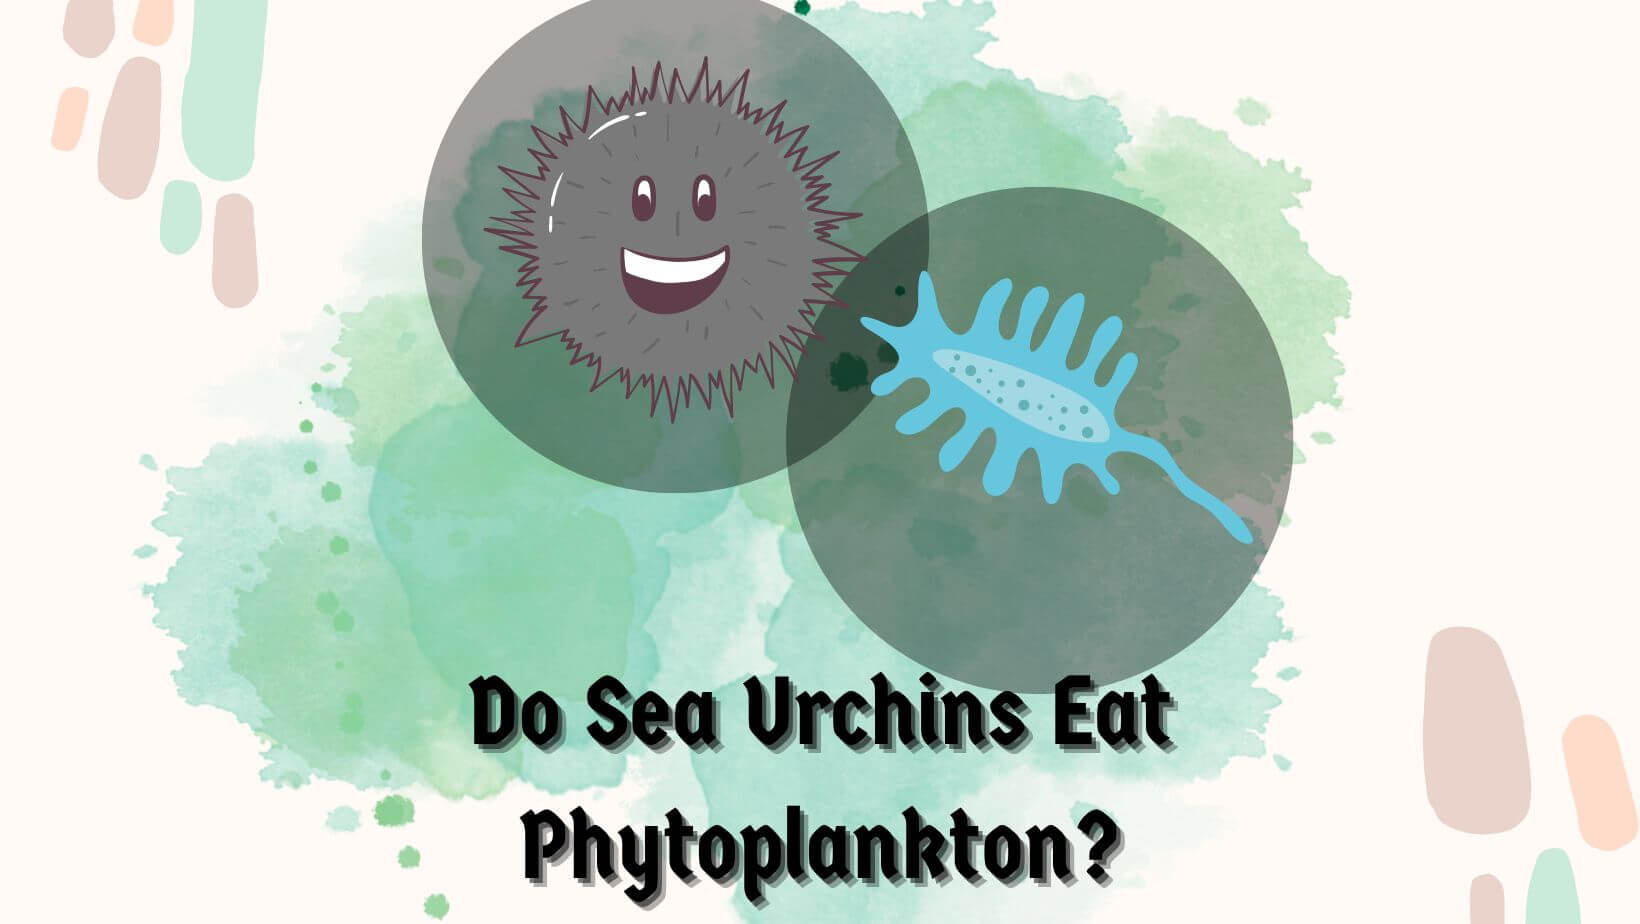 Do Sea Urchins Eat Phytoplankton?